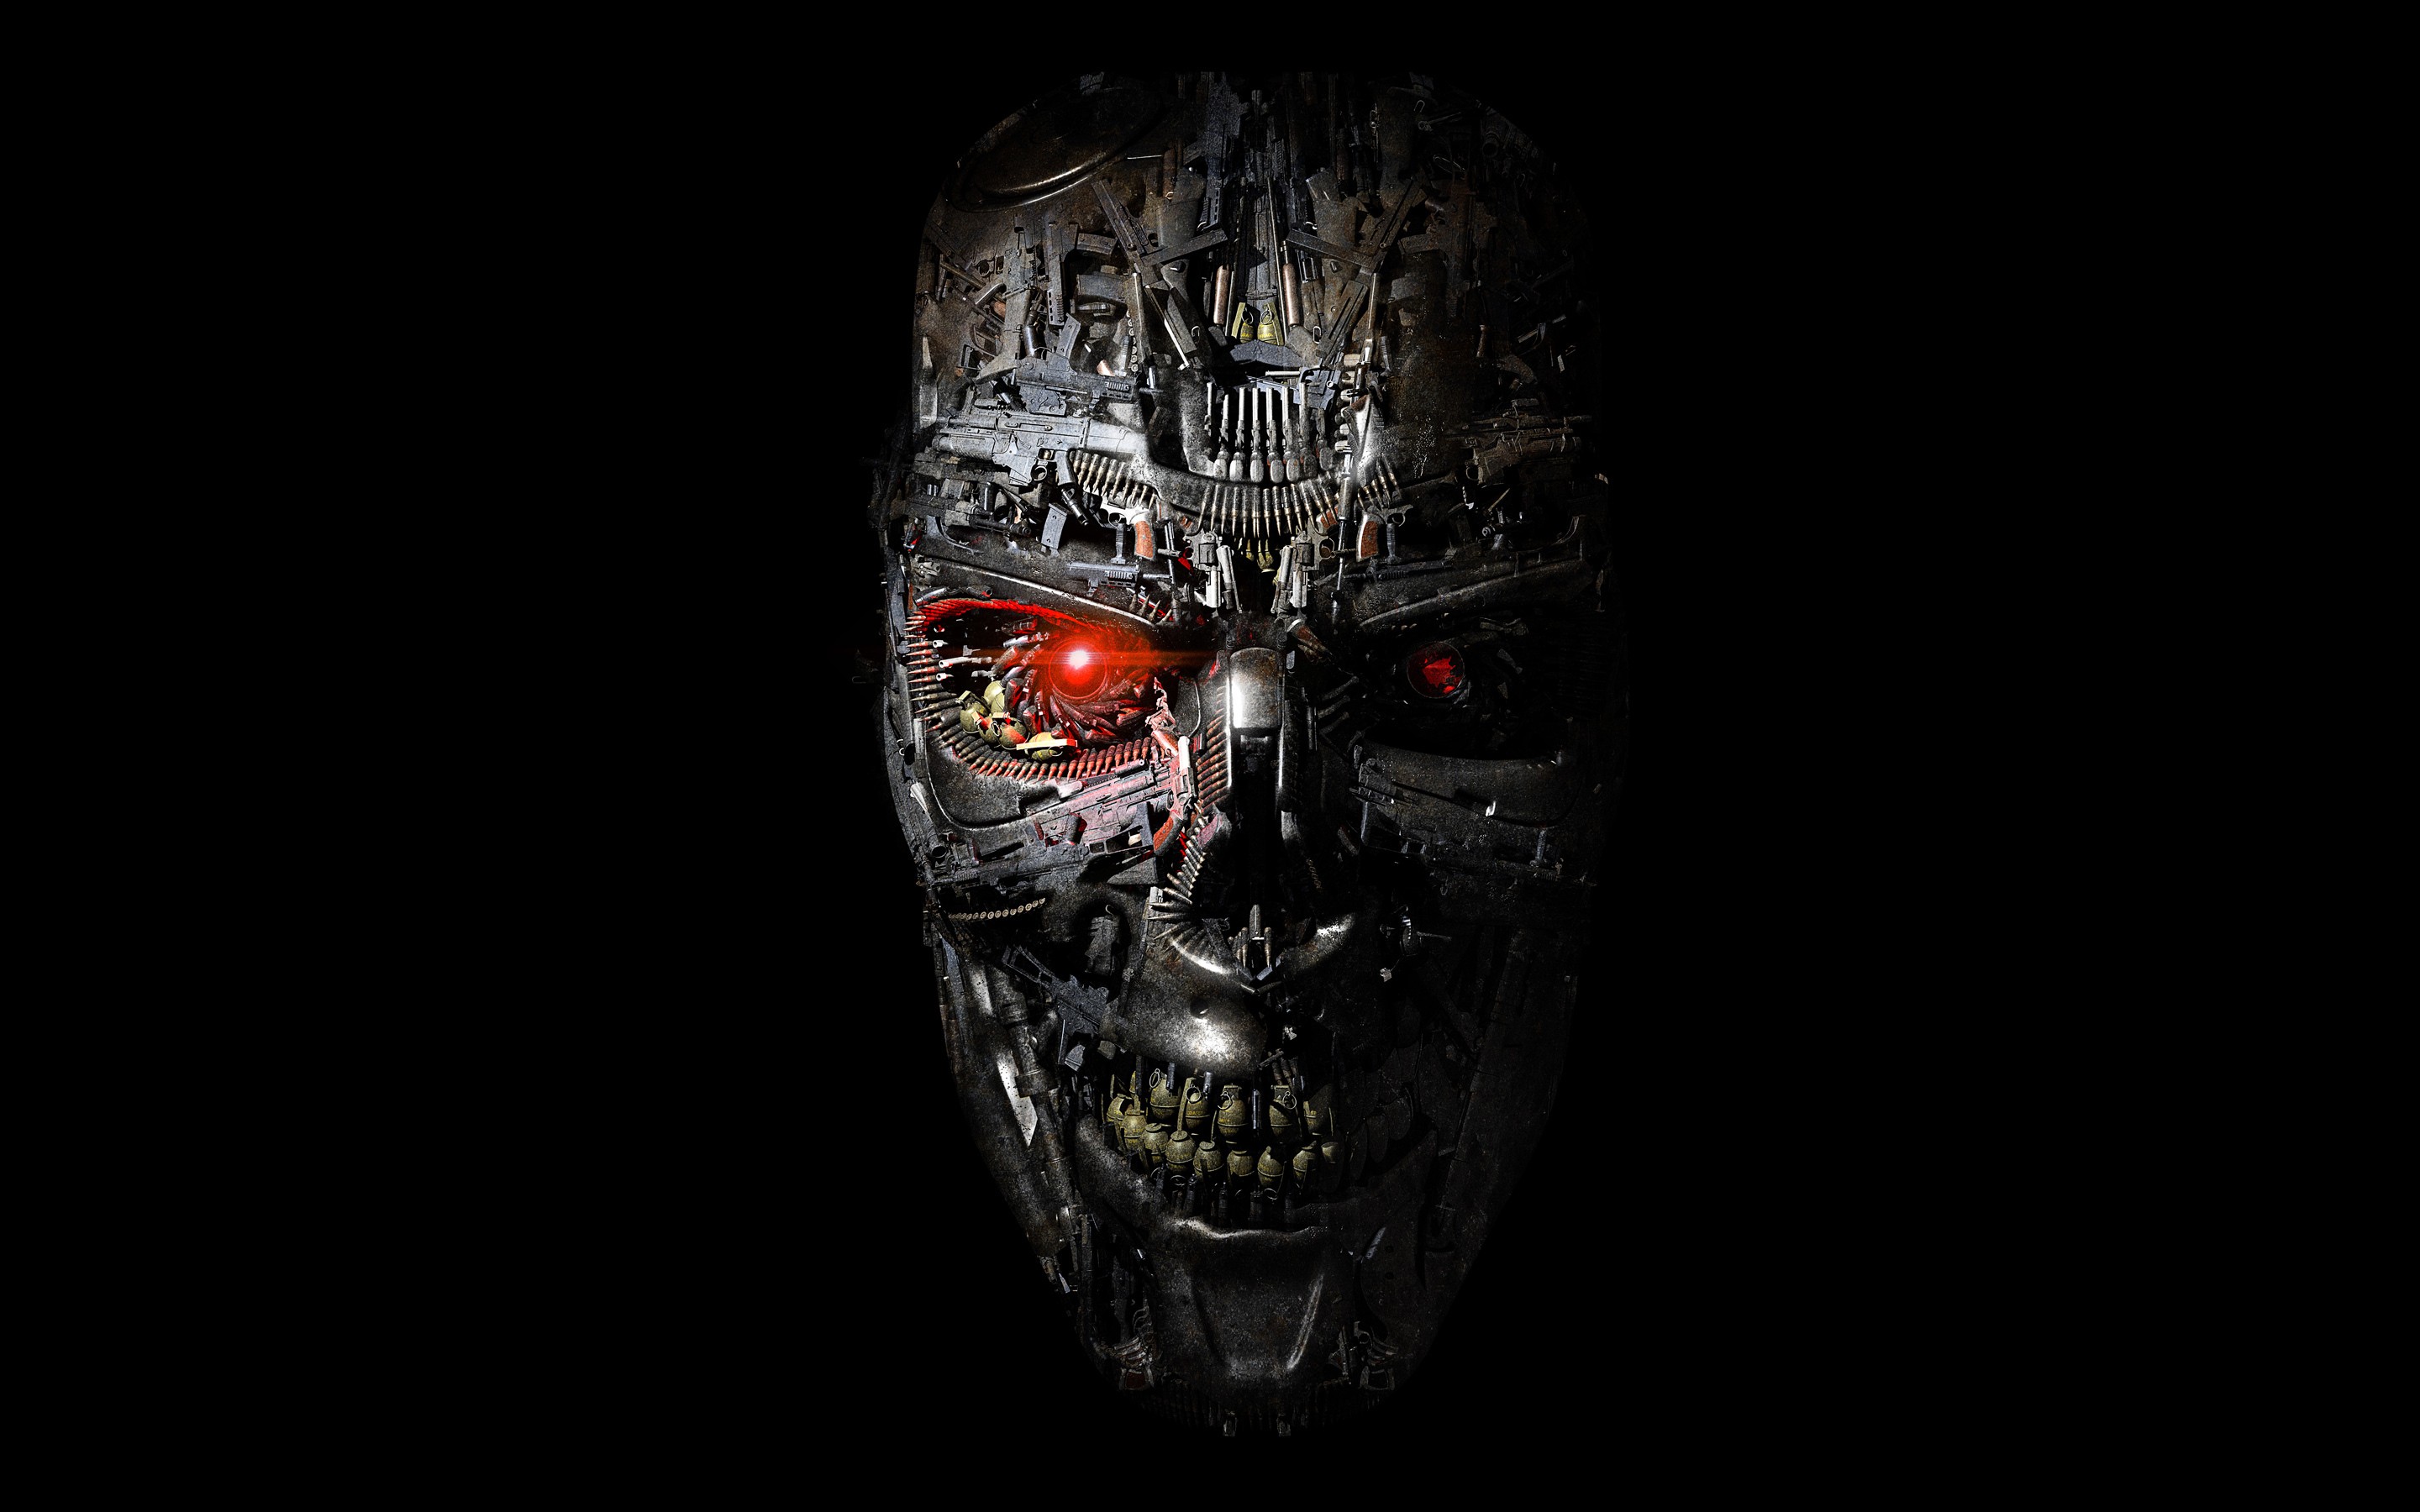 face, Red eyes, Teeth, Terminator, Terminator Genisys, Robot, Cyborg, Science fiction, Black background, Metal, Gears, Steel, Digital art, CGI, Artwork, Skull, Machine, T 1000, Movies Wallpaper